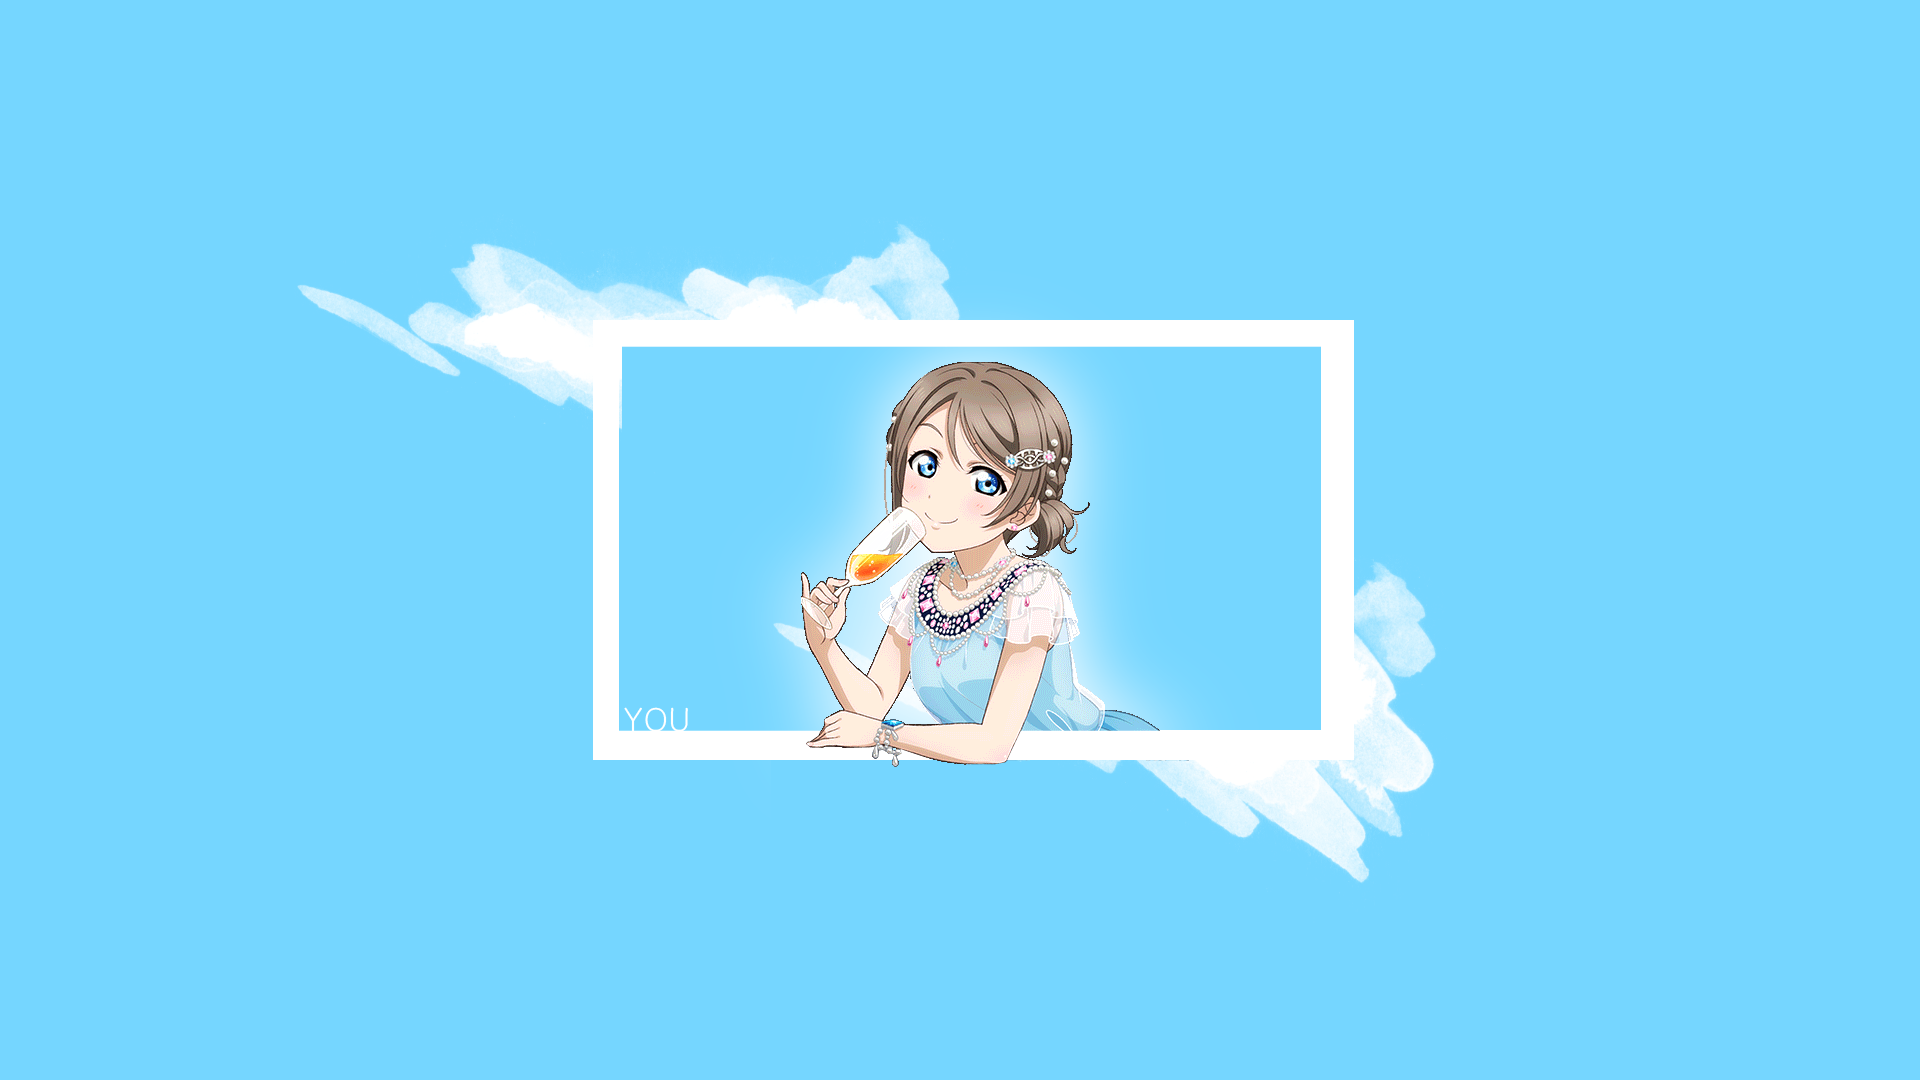 Anime 1920x1080 Watanabe You Love Live! Sunshine anime simple background light blue